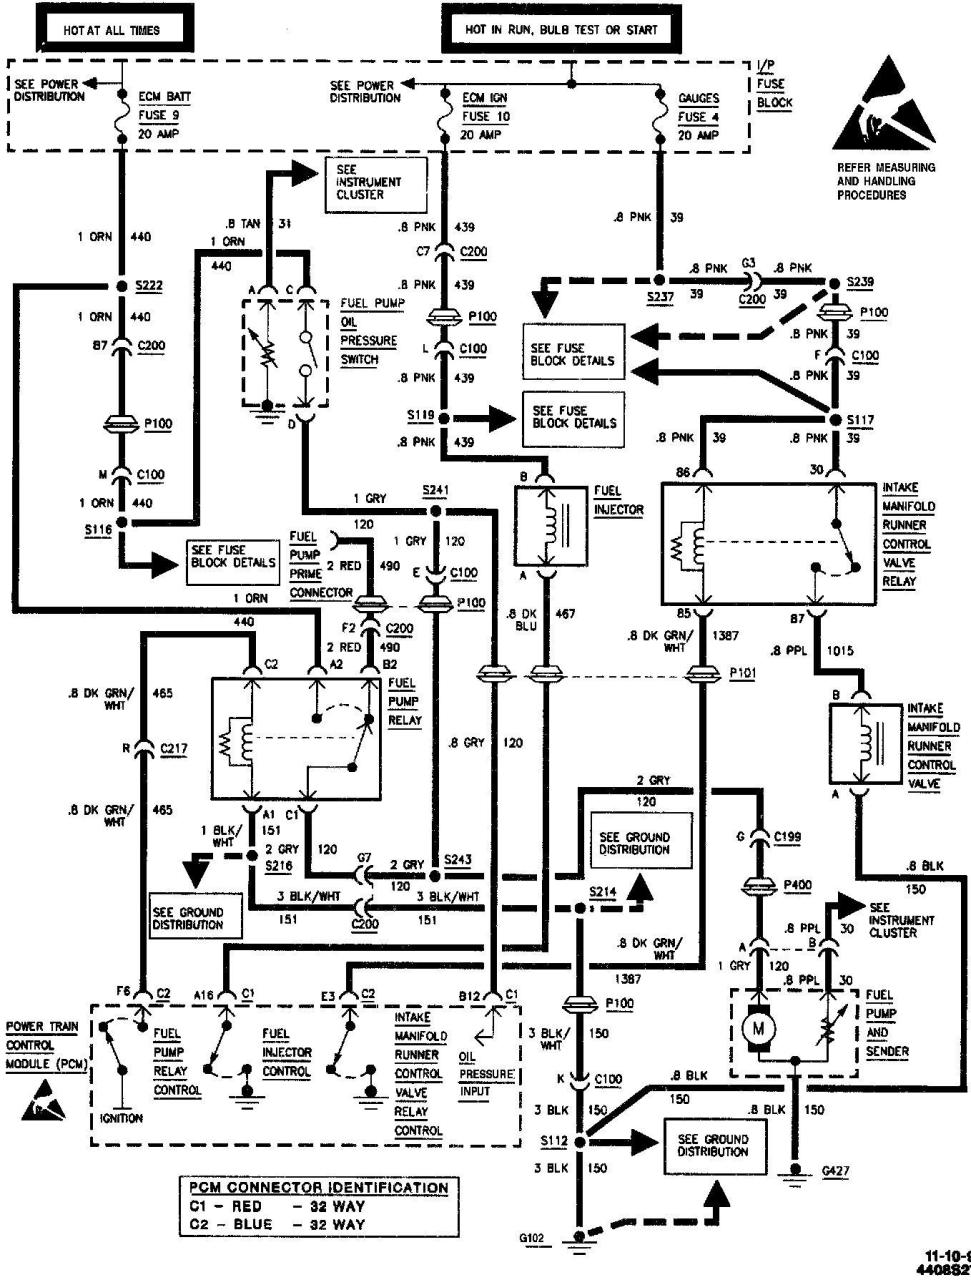 M&S Intercom Wiring Diagram